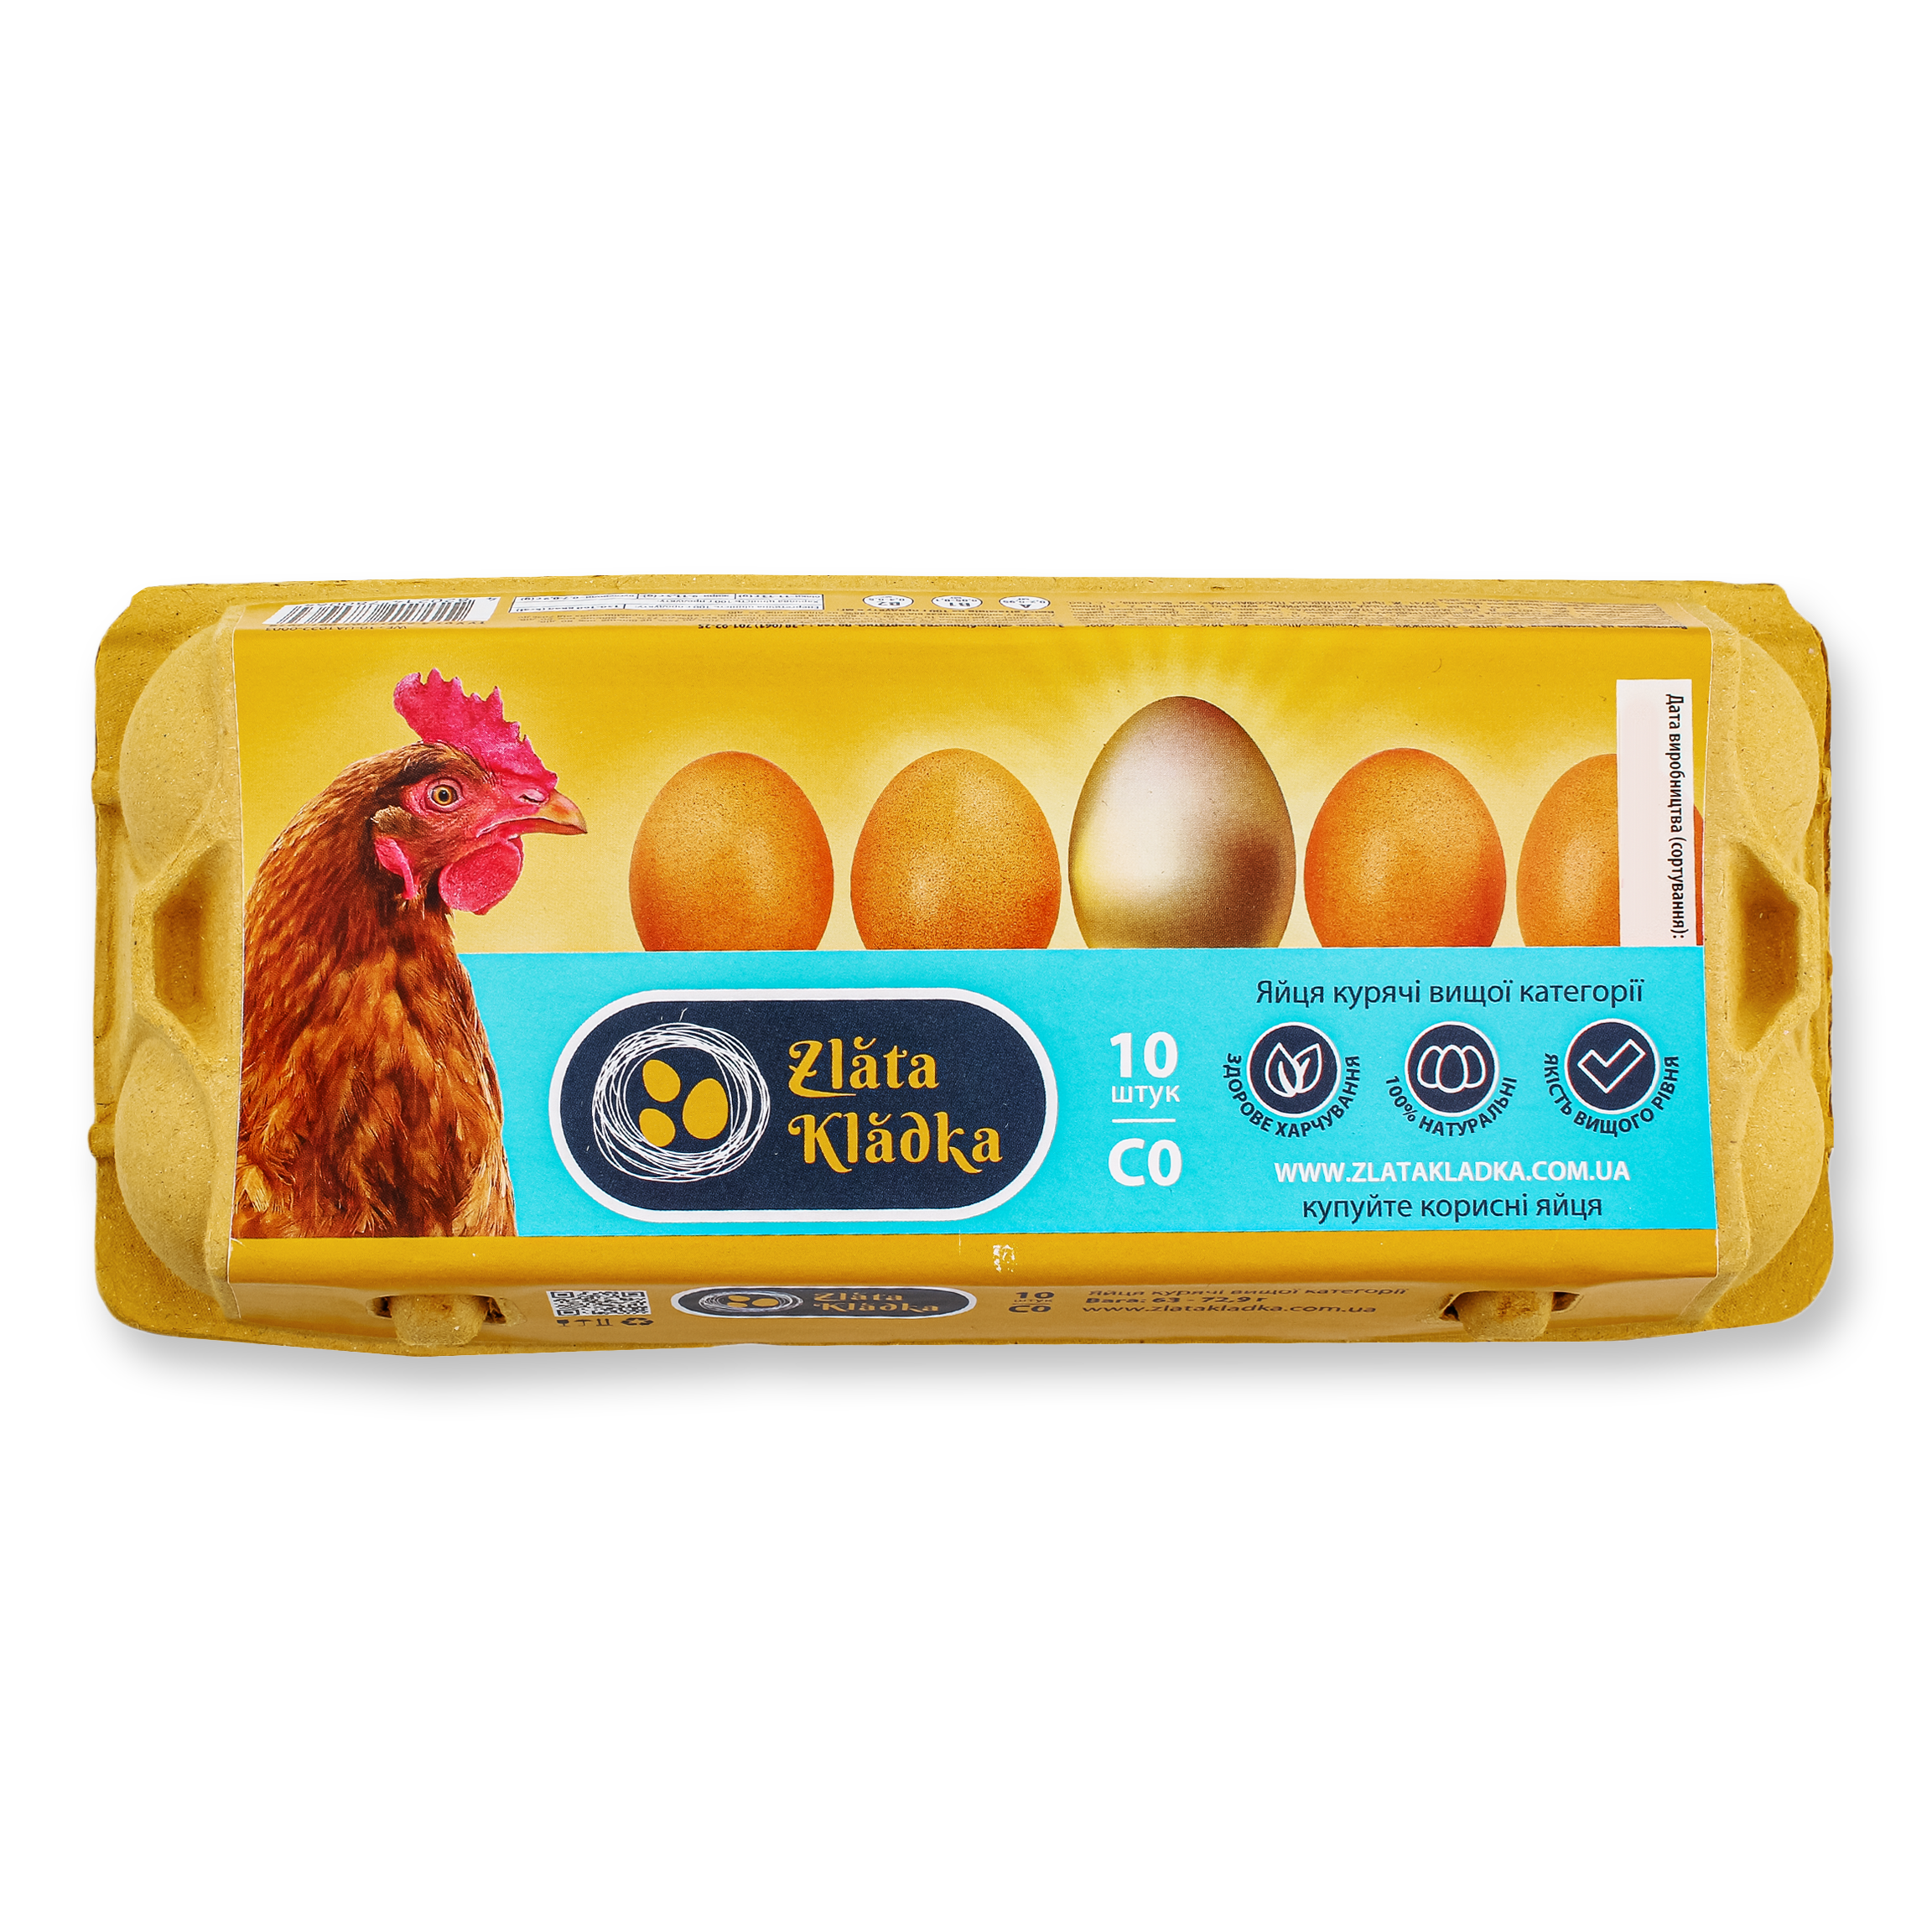 Zlata Kladka С0 Chicken Eggs 10pcs